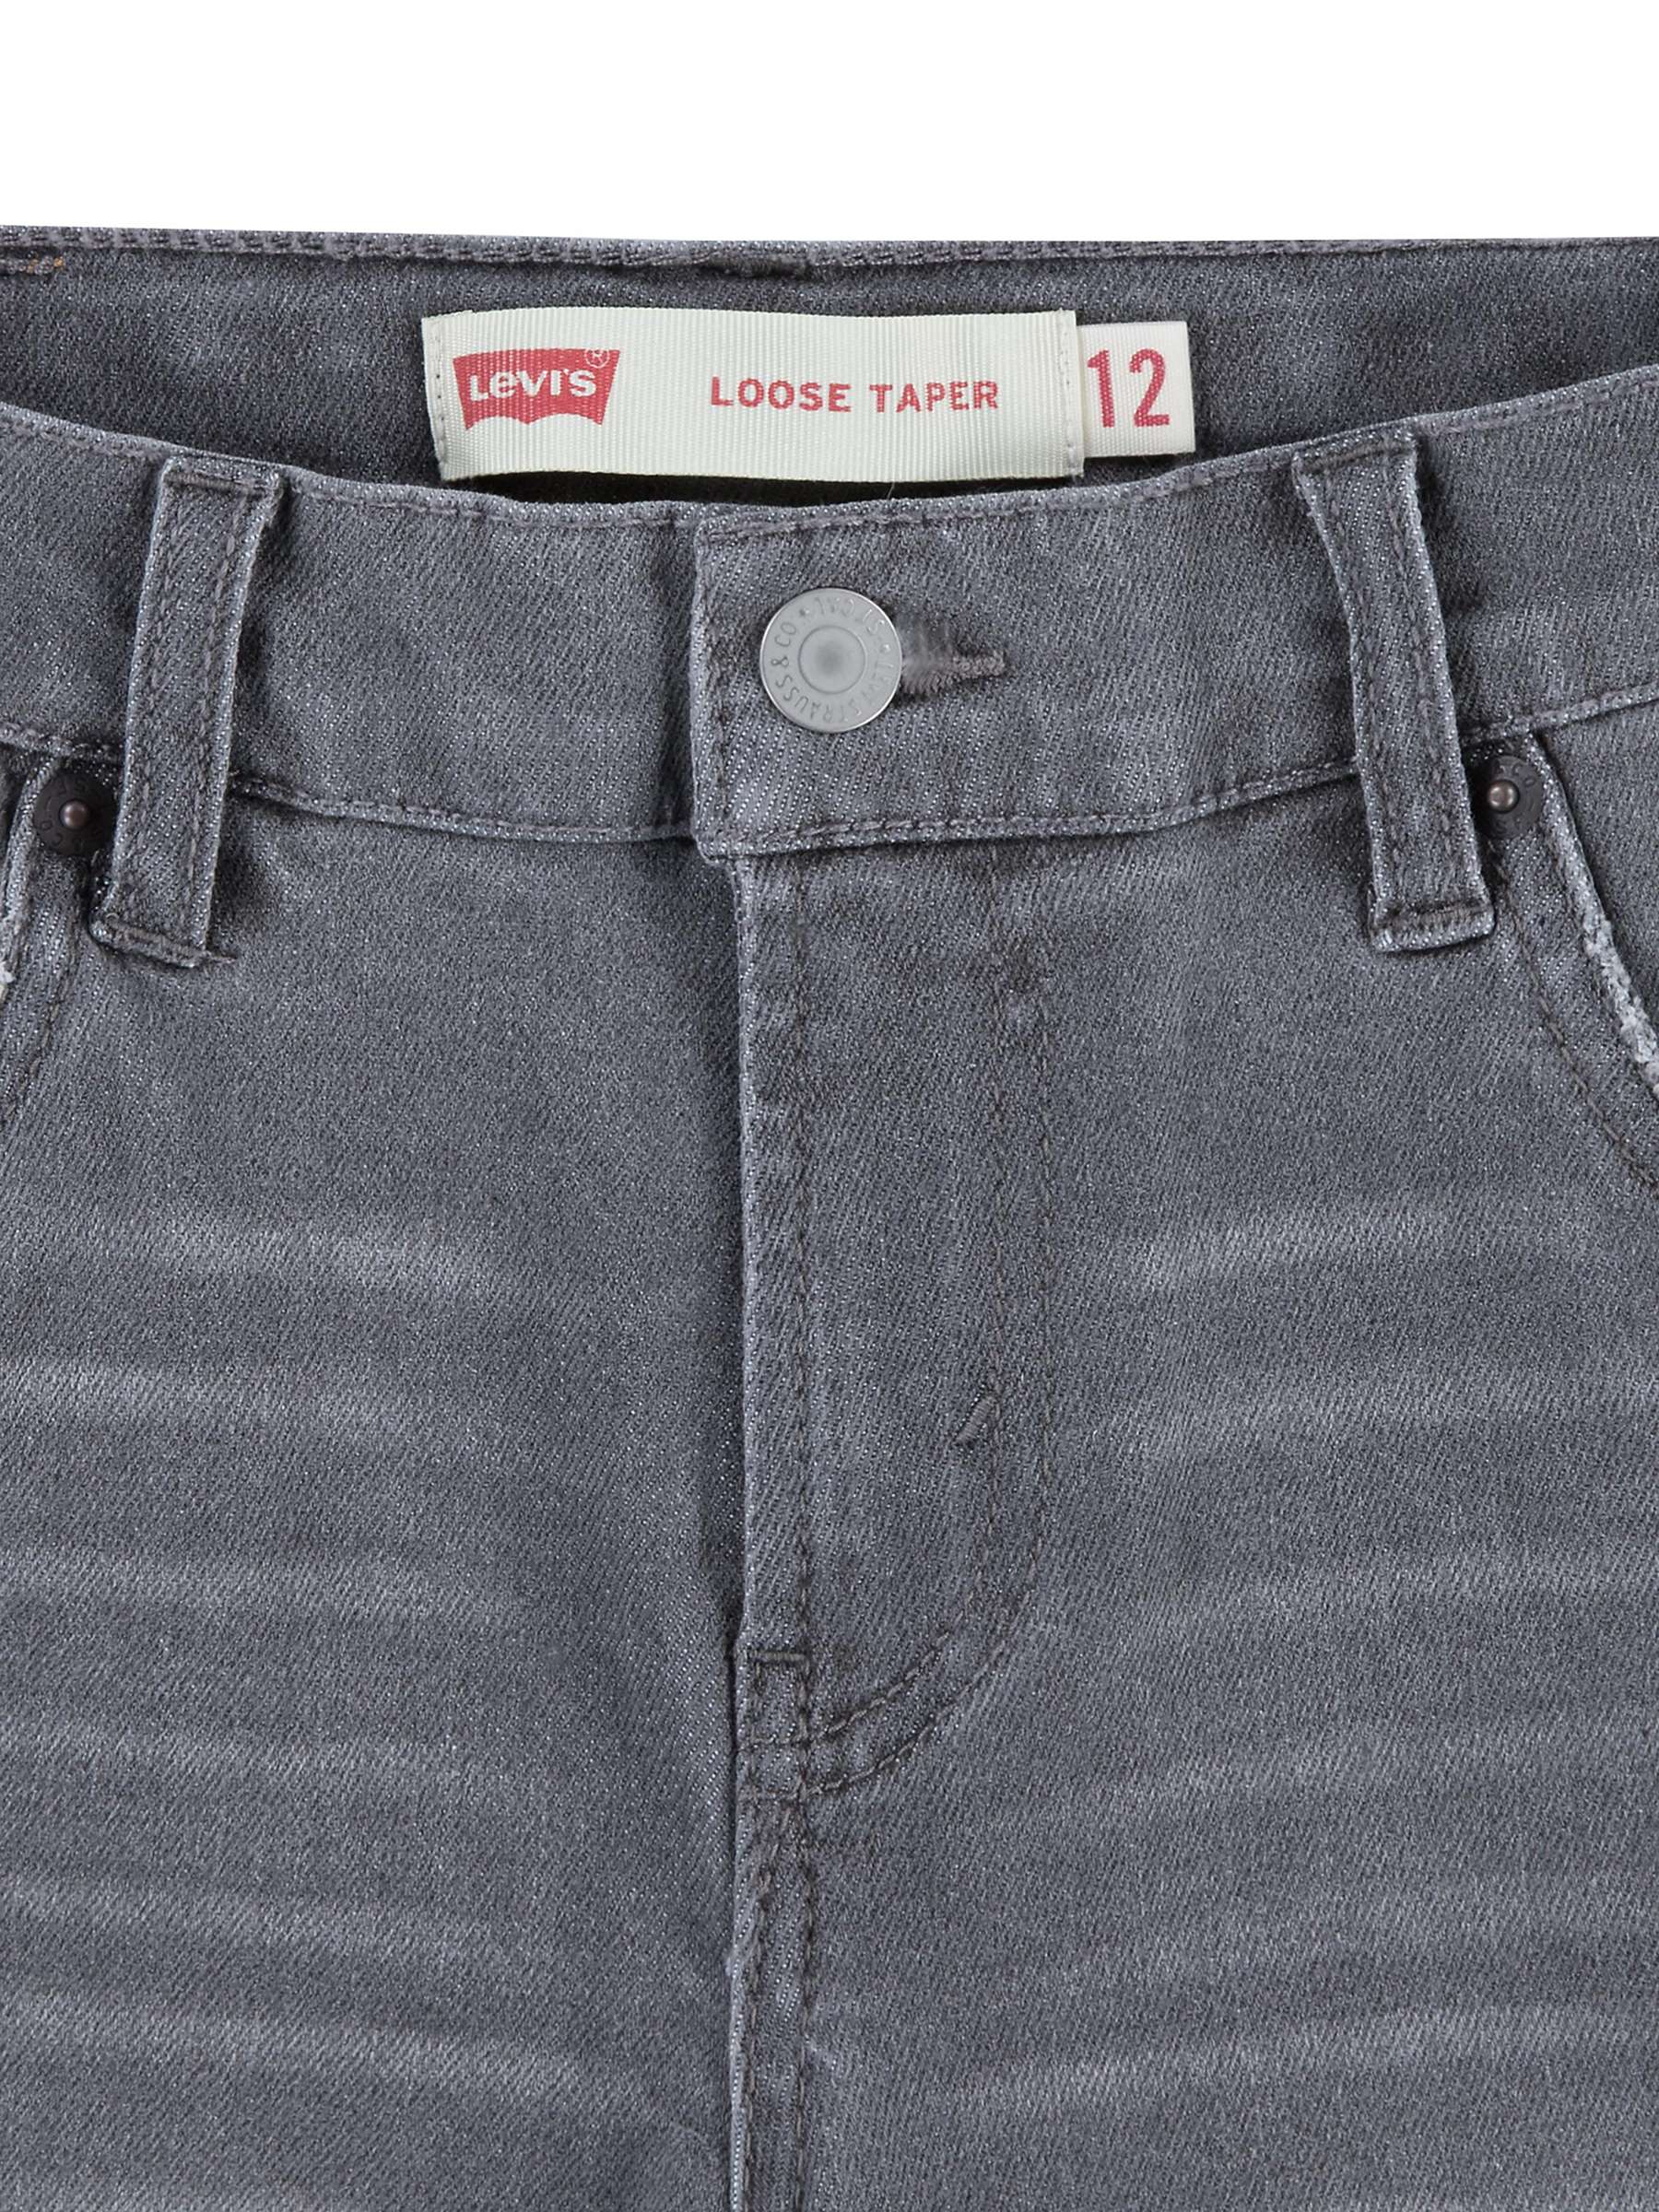 Buy Levi's Kids' Loose Taper Jeans, Graphite Online at johnlewis.com